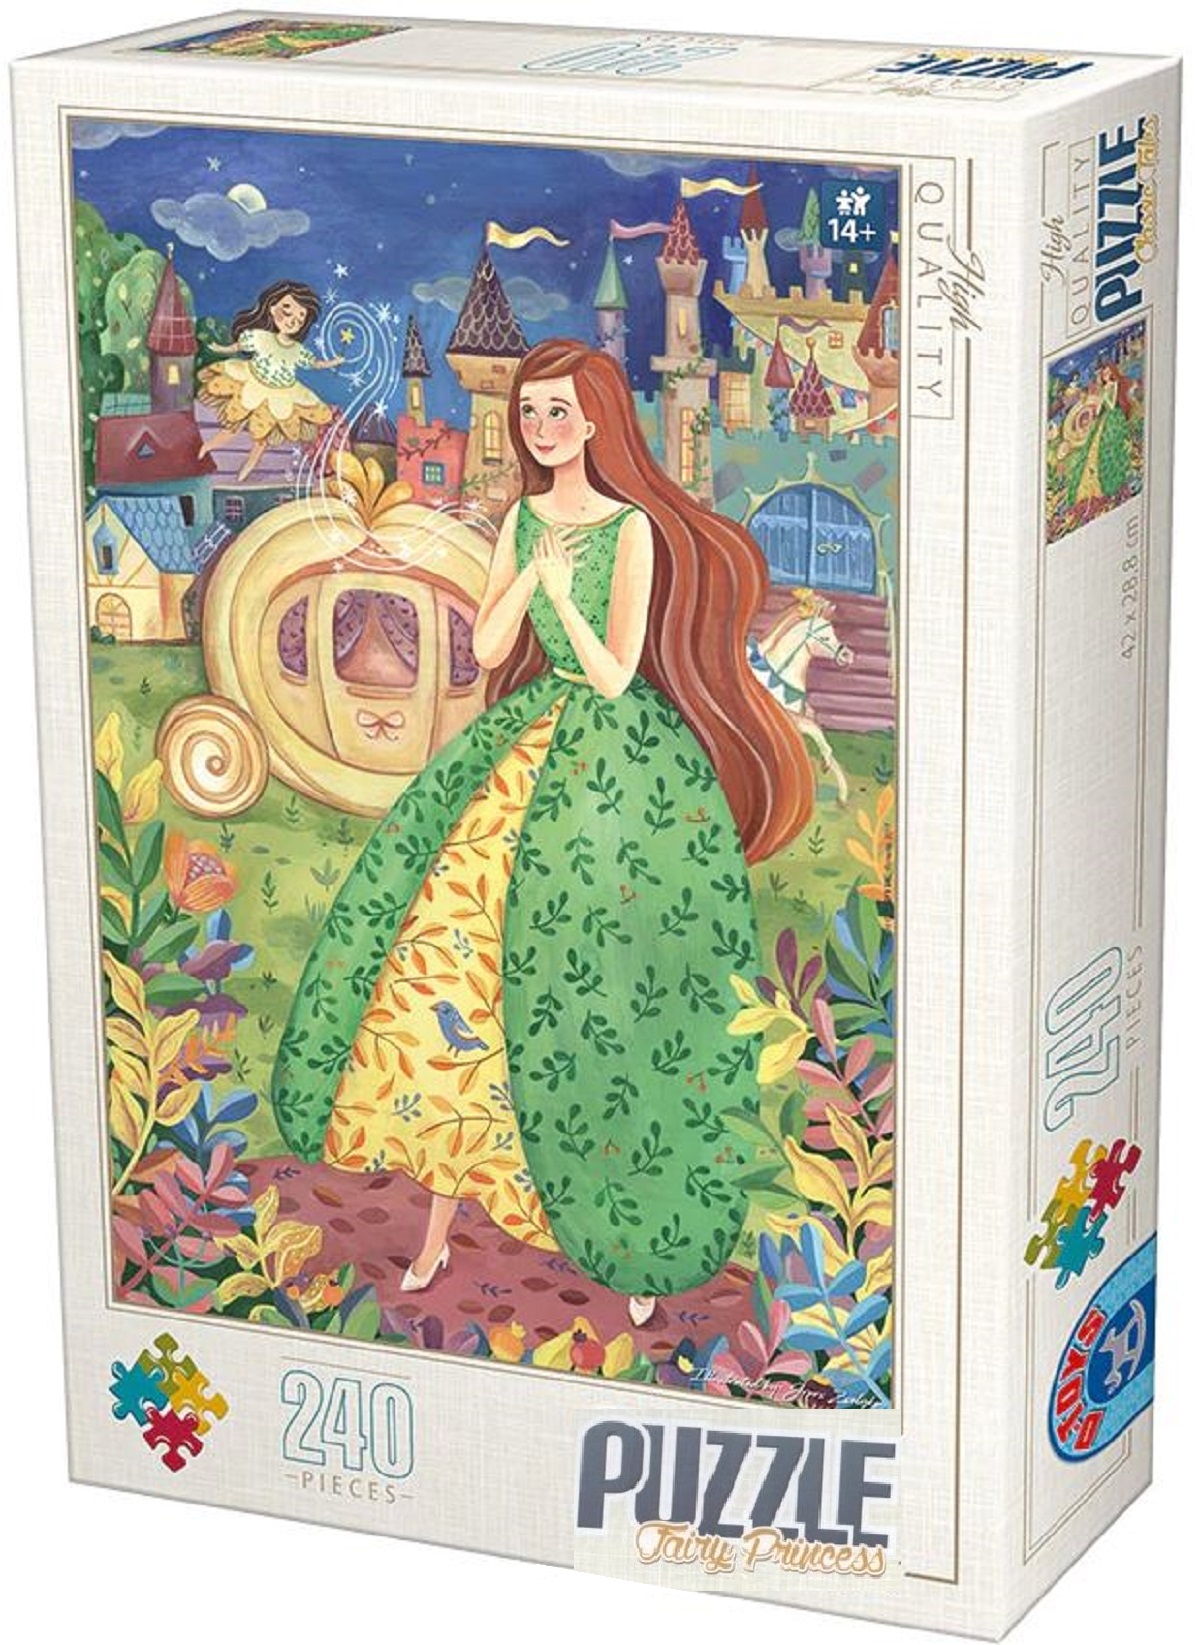 Puzzle 240: Fairy princess